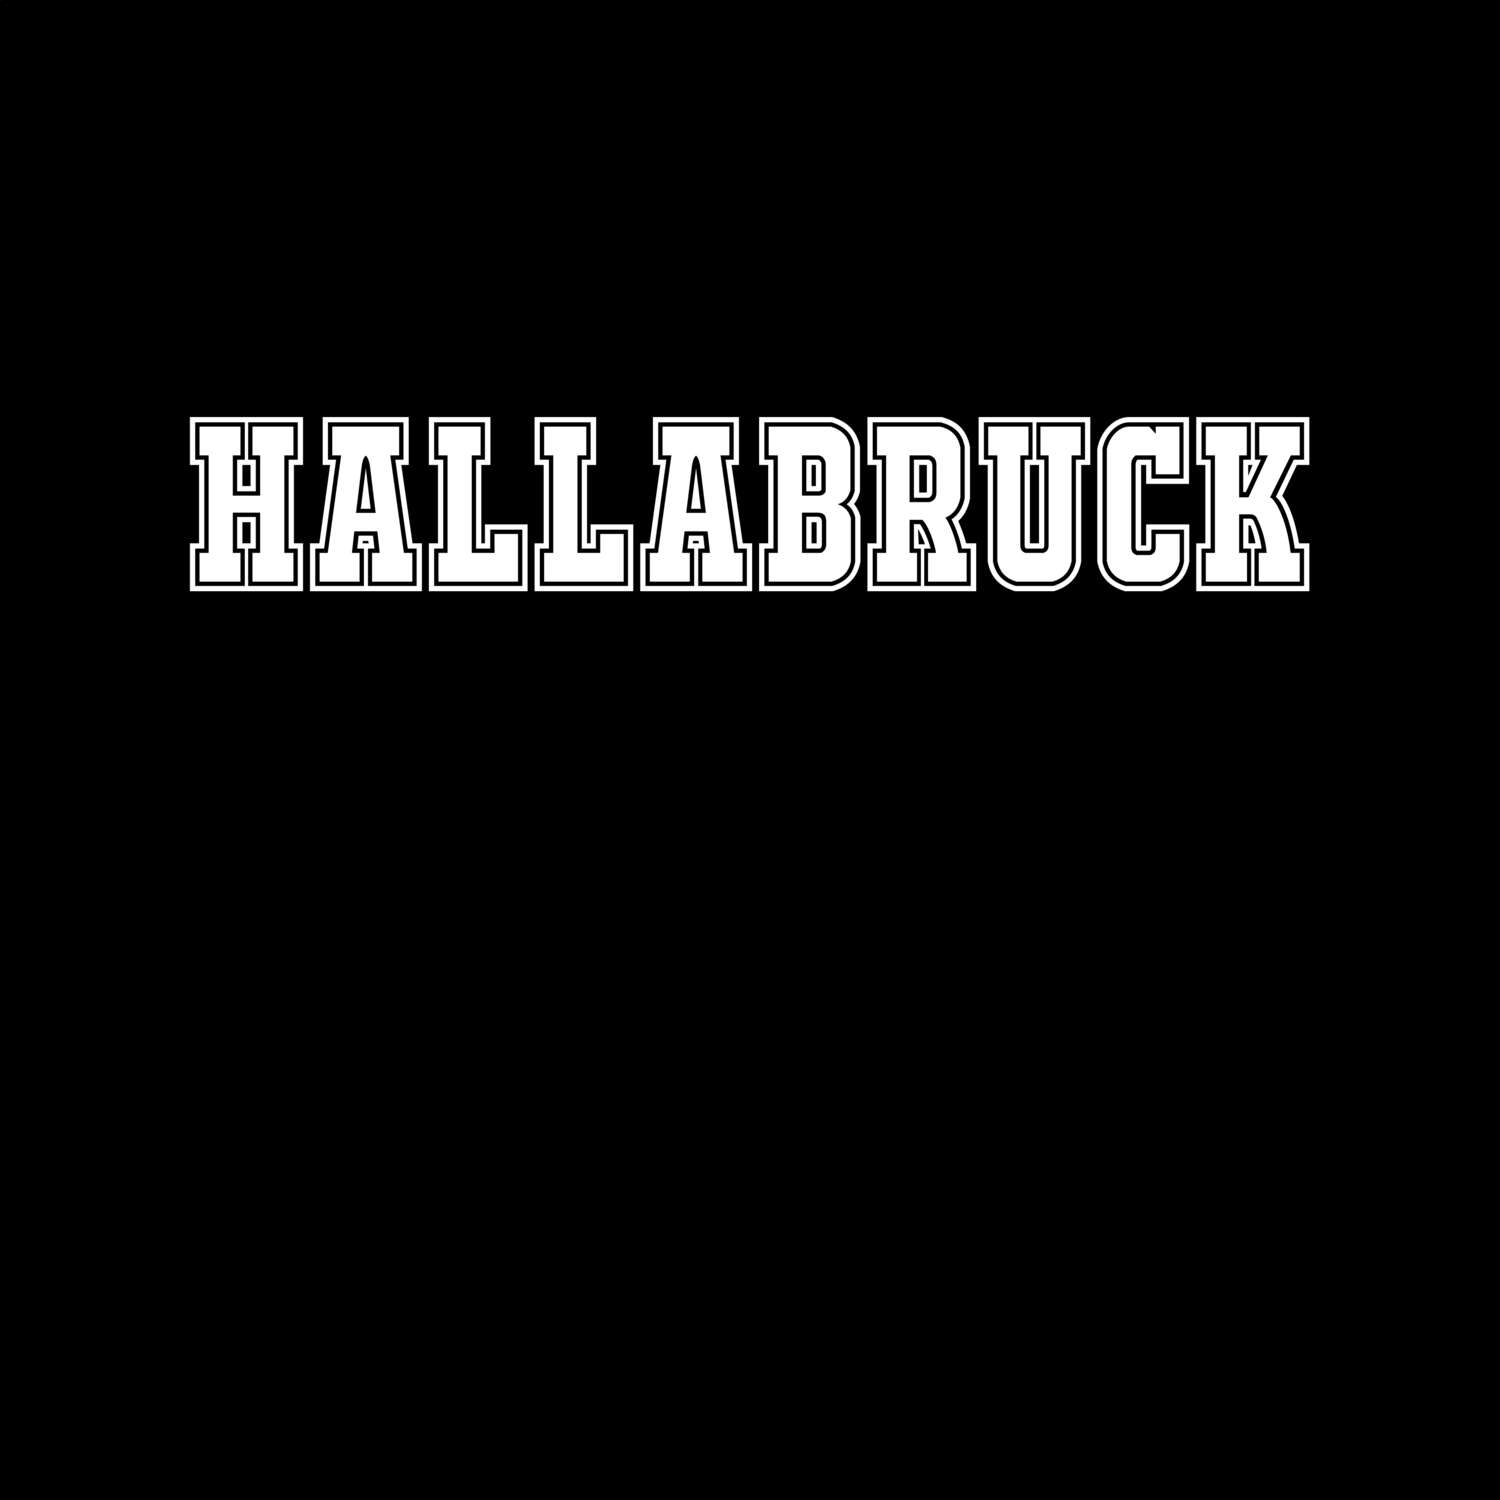 Hallabruck T-Shirt »Classic«